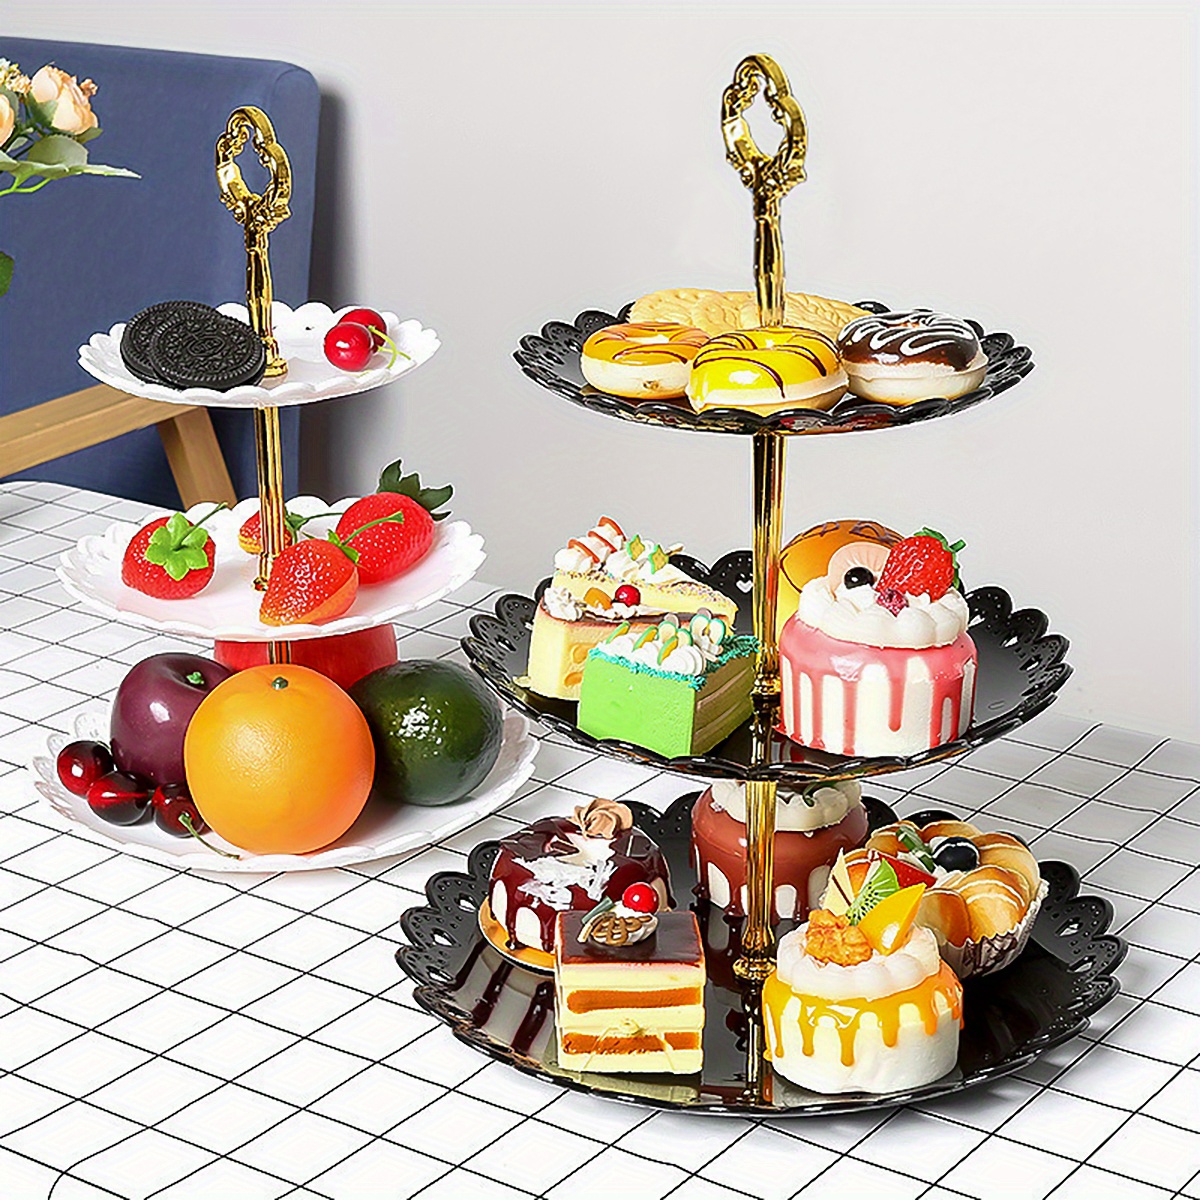 24 Kitchen 3 Piece Set Metal Cake Stands Gold Cupcake Stands